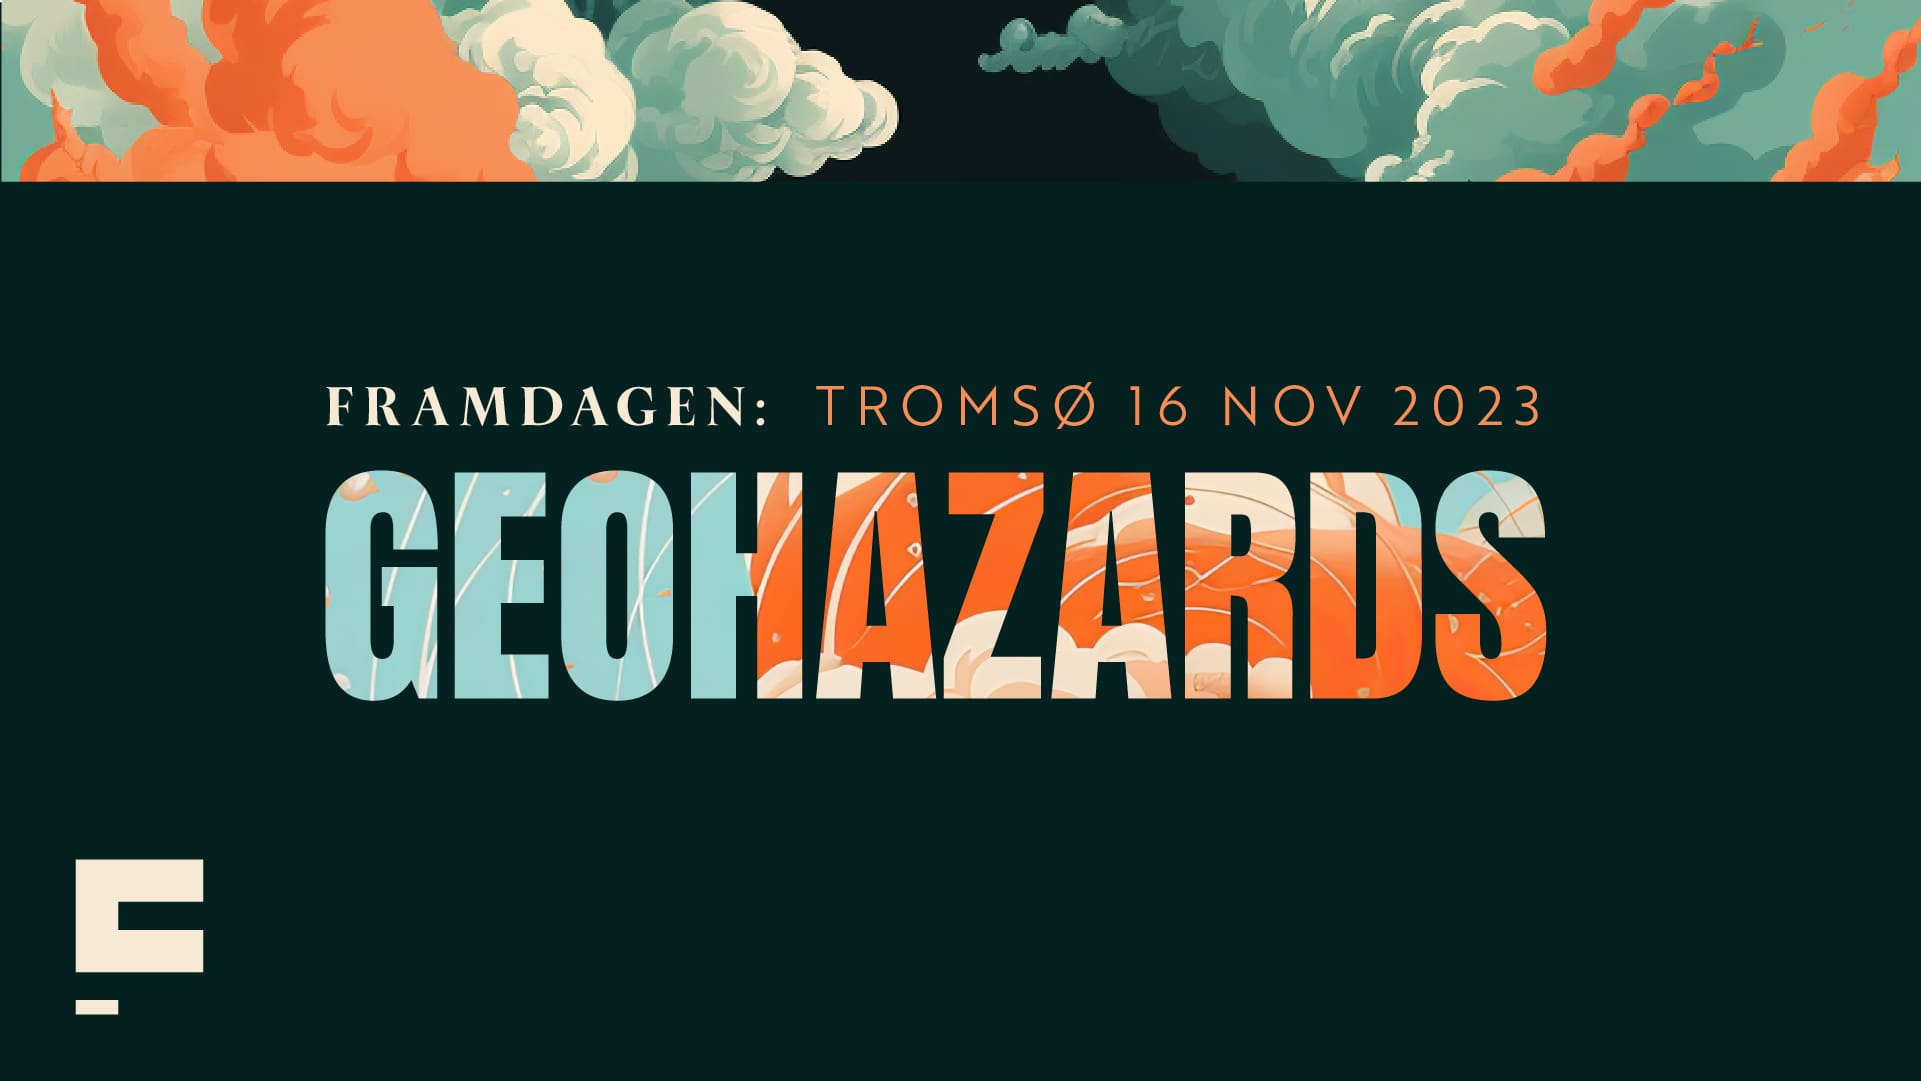 Plakat for Framdagen, tema er Geohazards